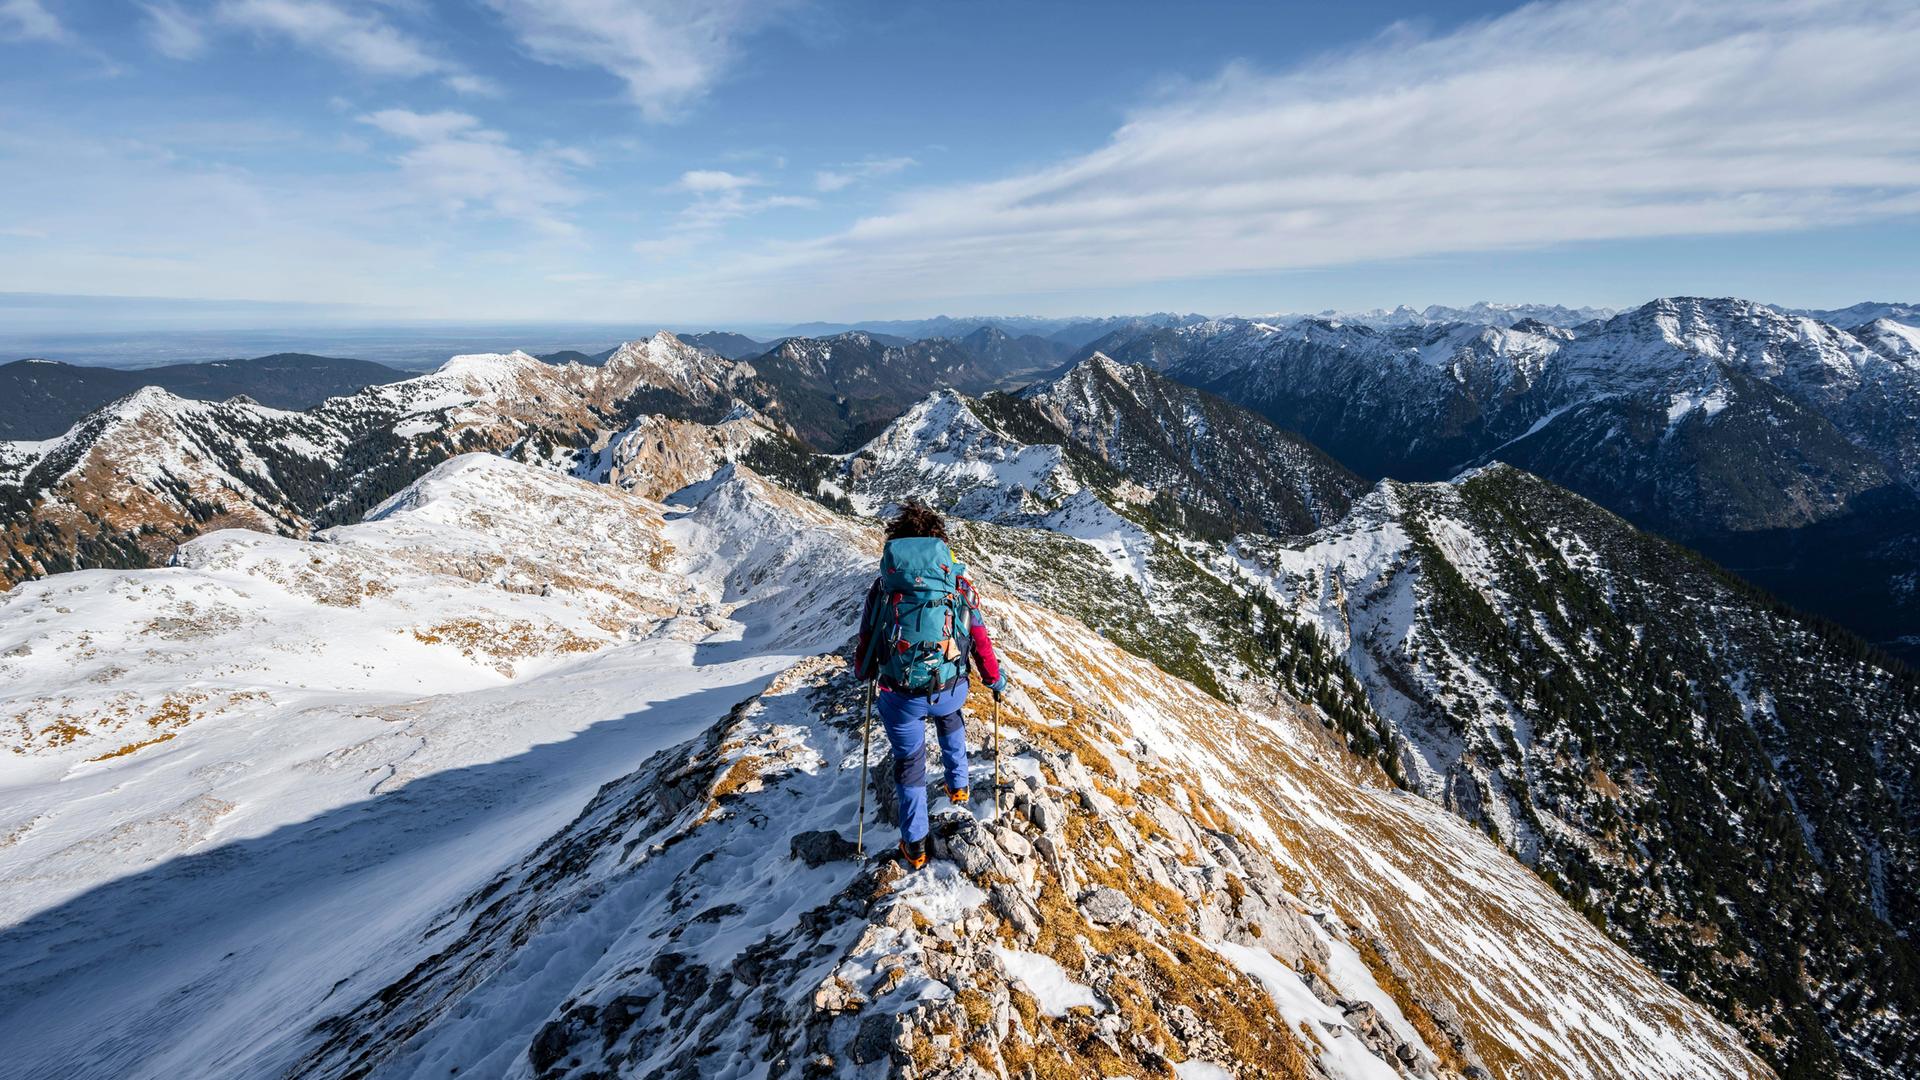 Bergsteigerin am schmalen felsigen verschneiten Grat der Ammergauer Hochplatte, Blick Richtung Lösertaljoch, Ausblick auf Bergpanorama